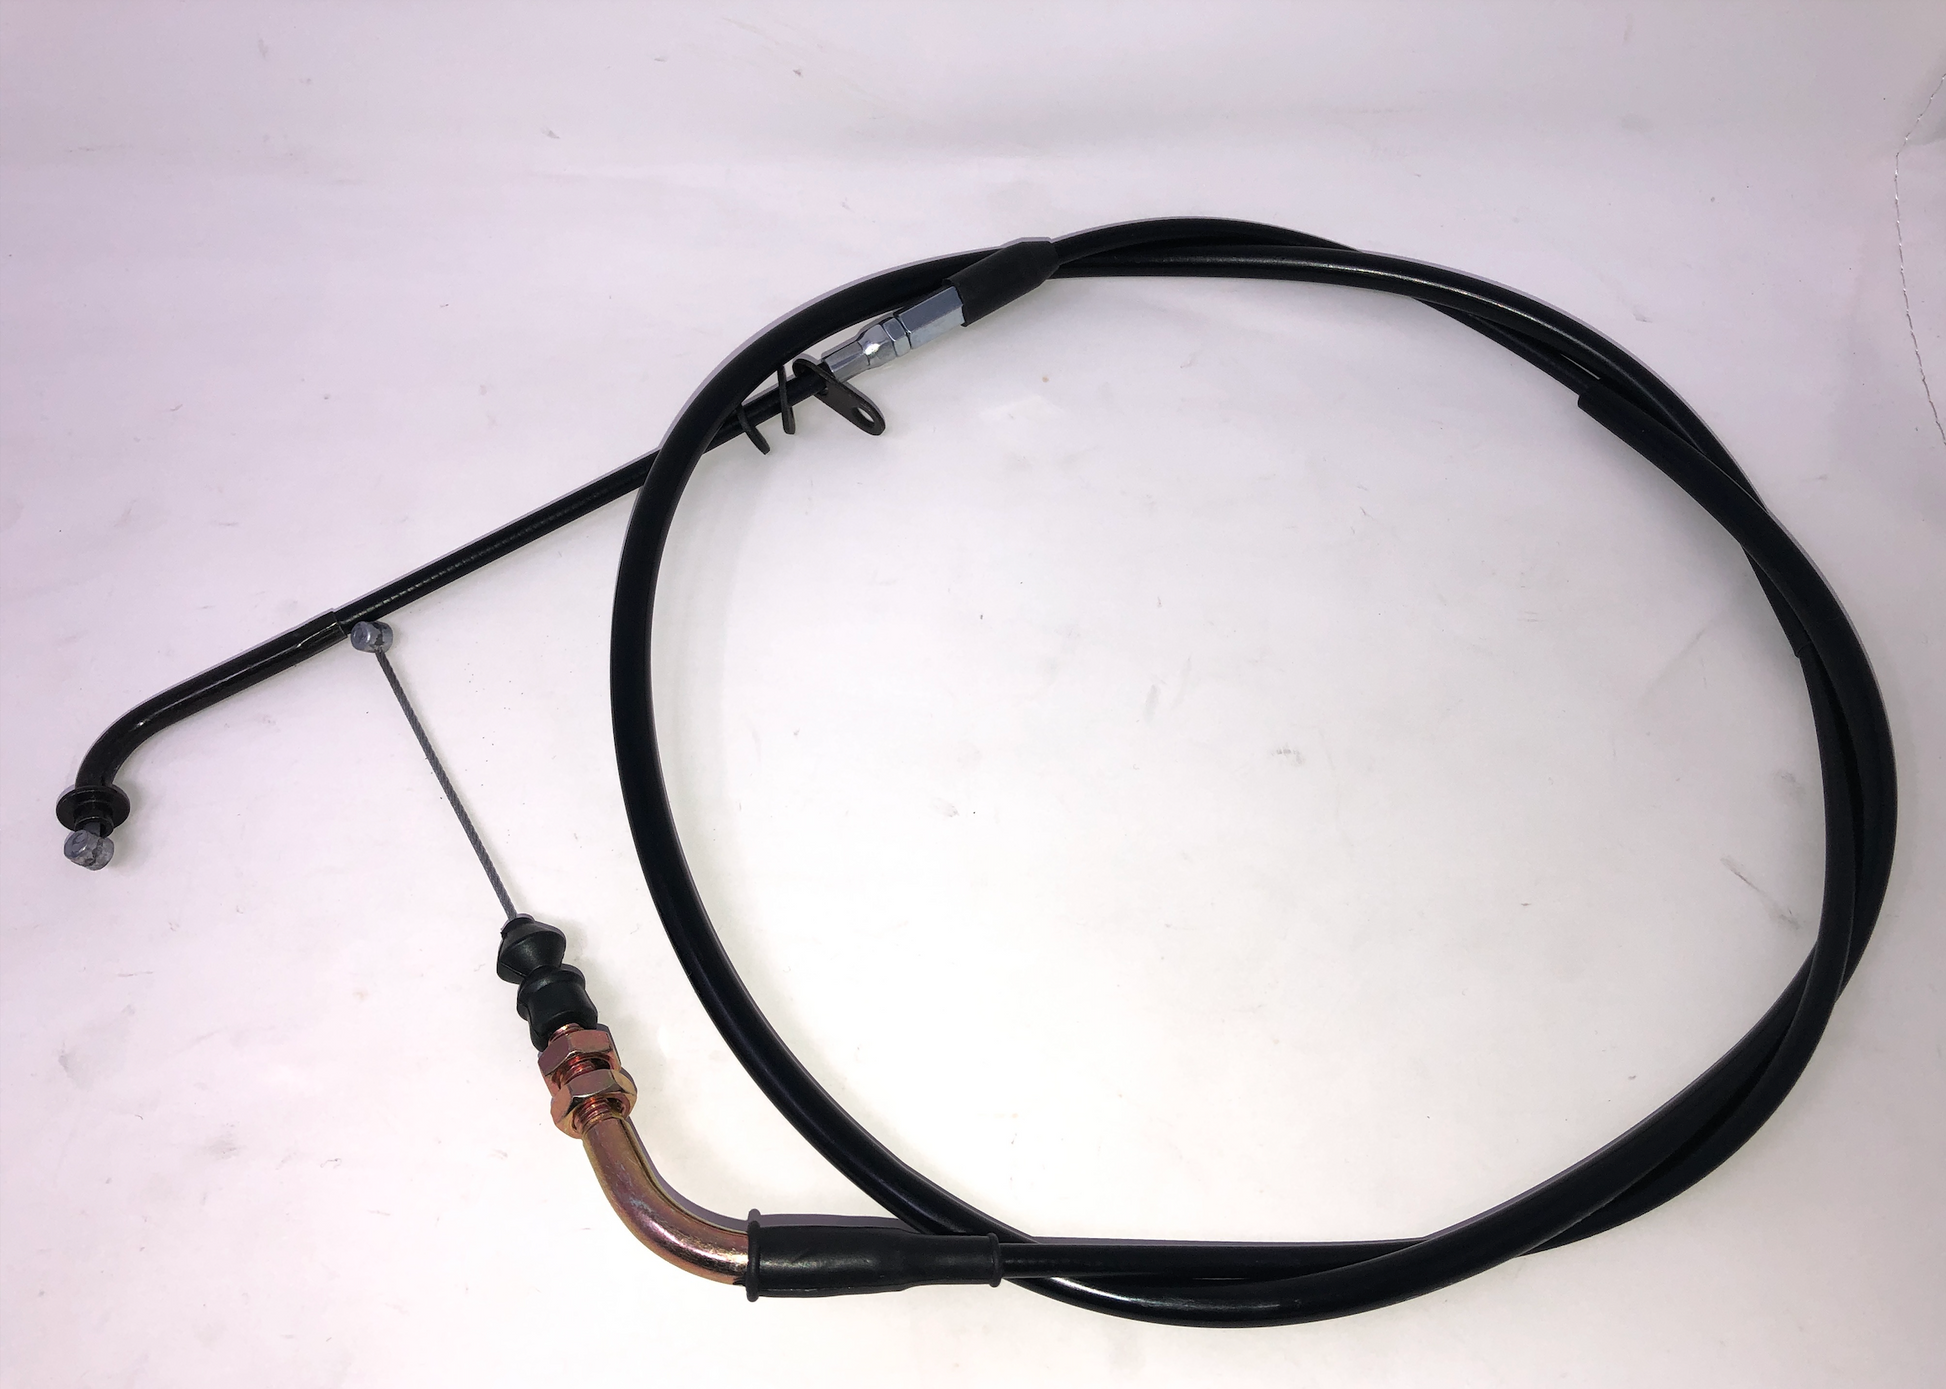 Part # 08020191 throttle cable for X18 50cc pocket bike